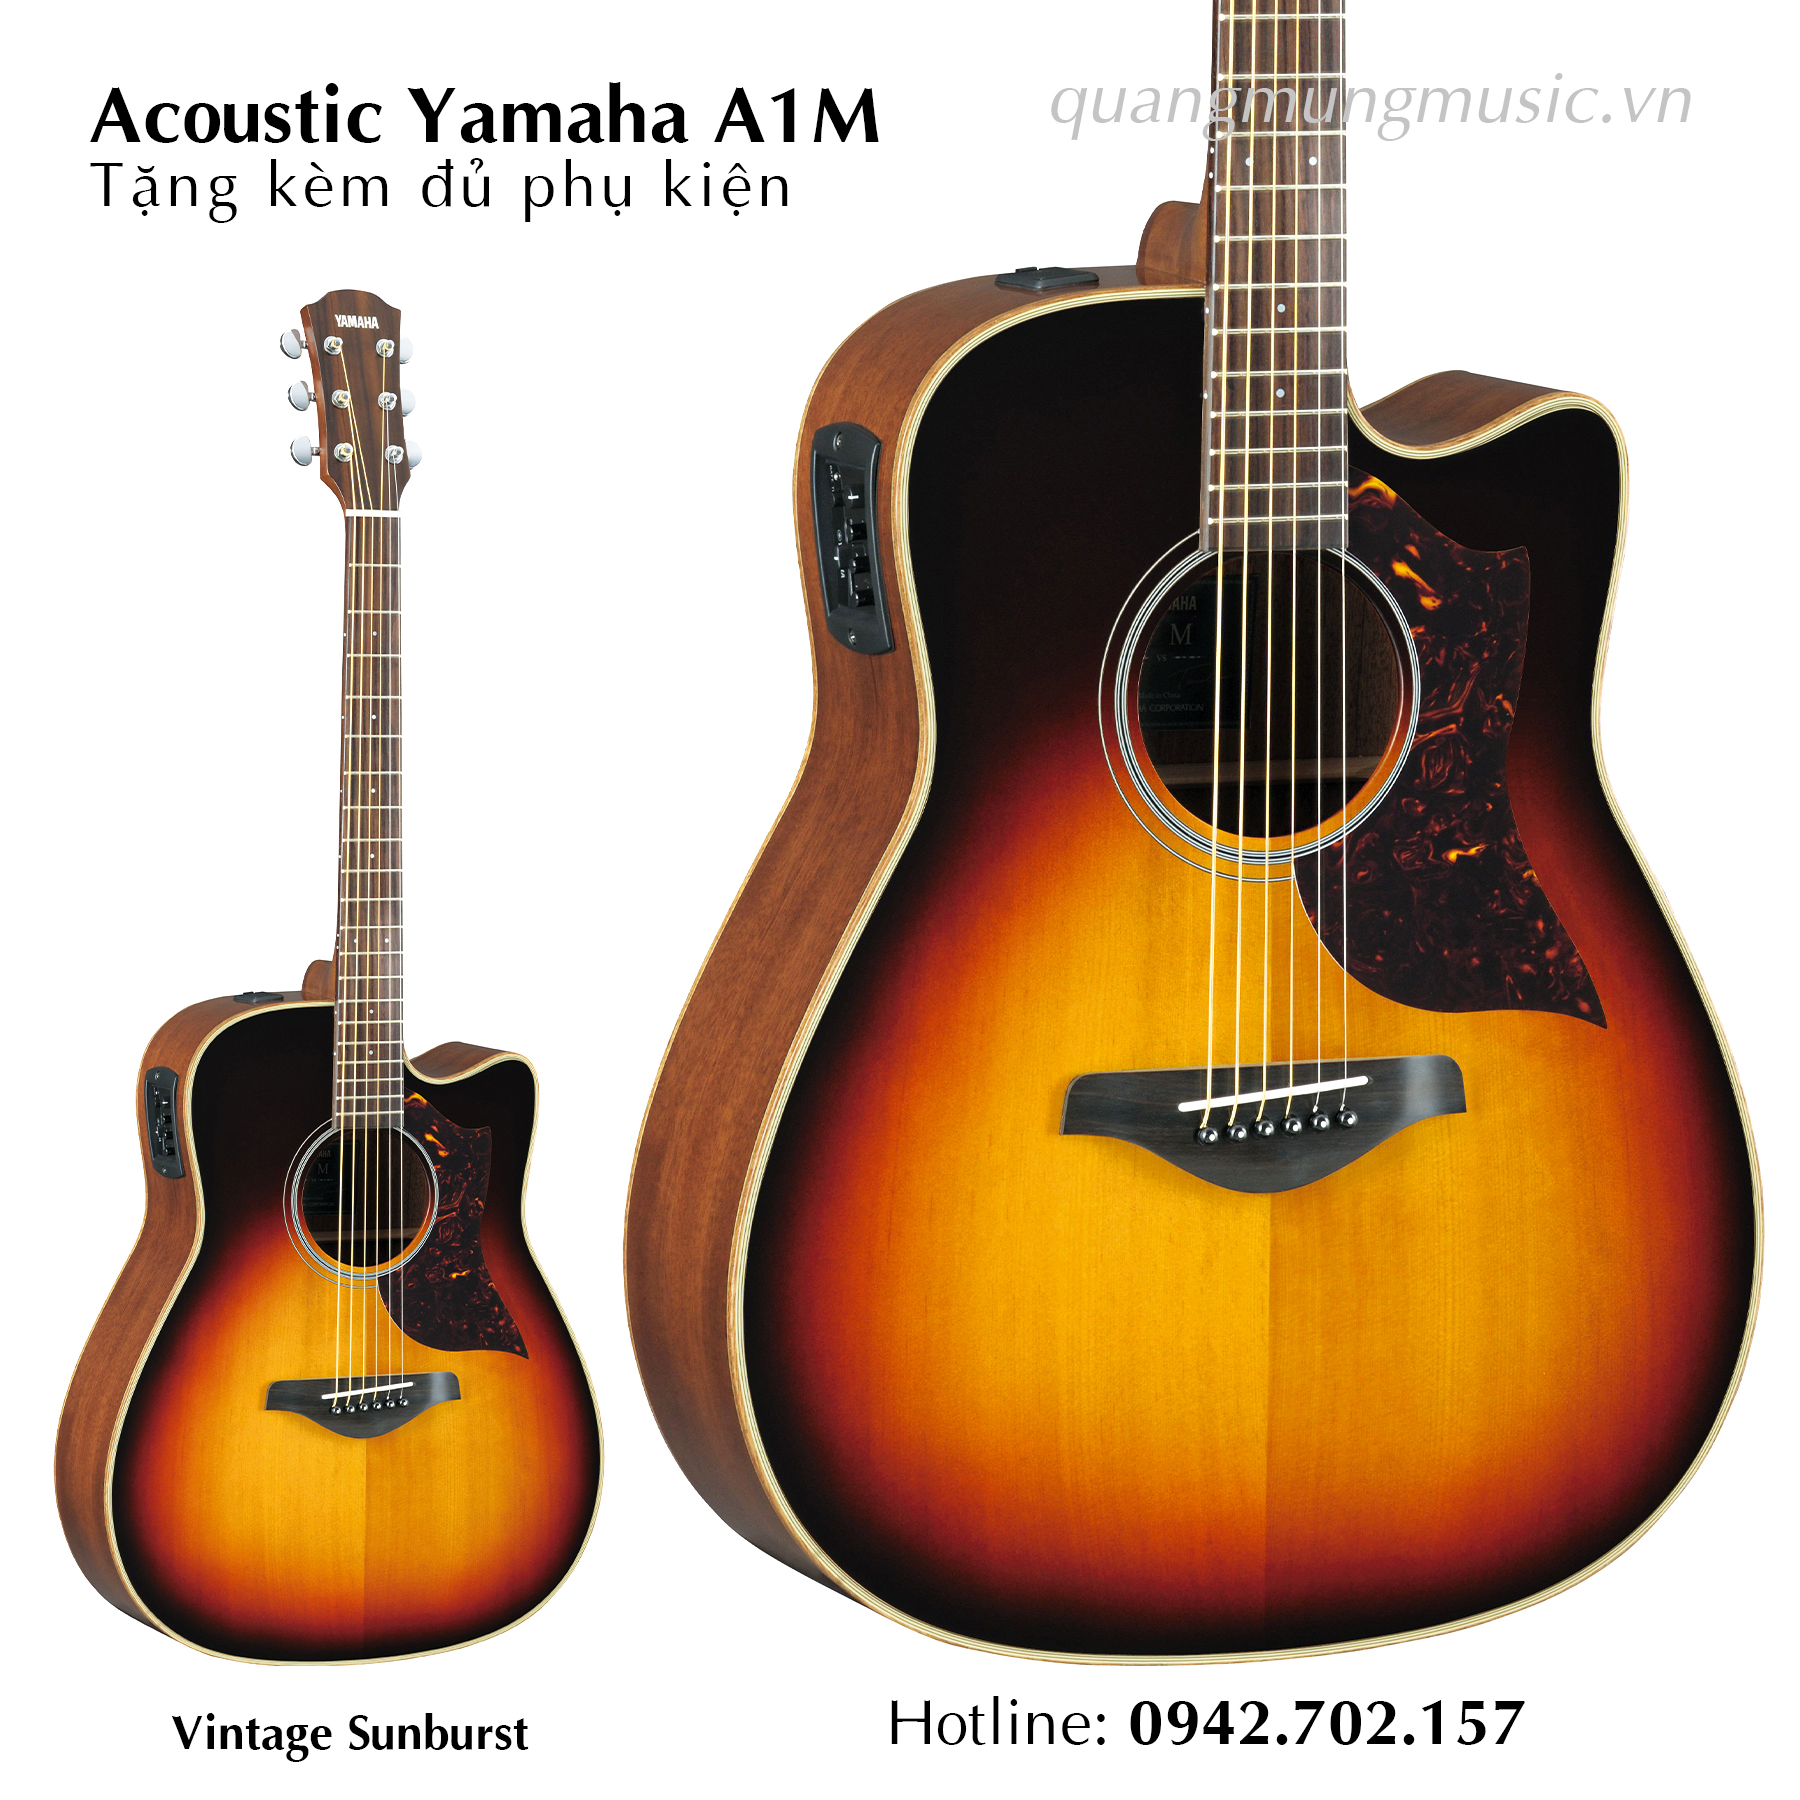 Acoustic Yamaha A1M-Vintage Sunburst